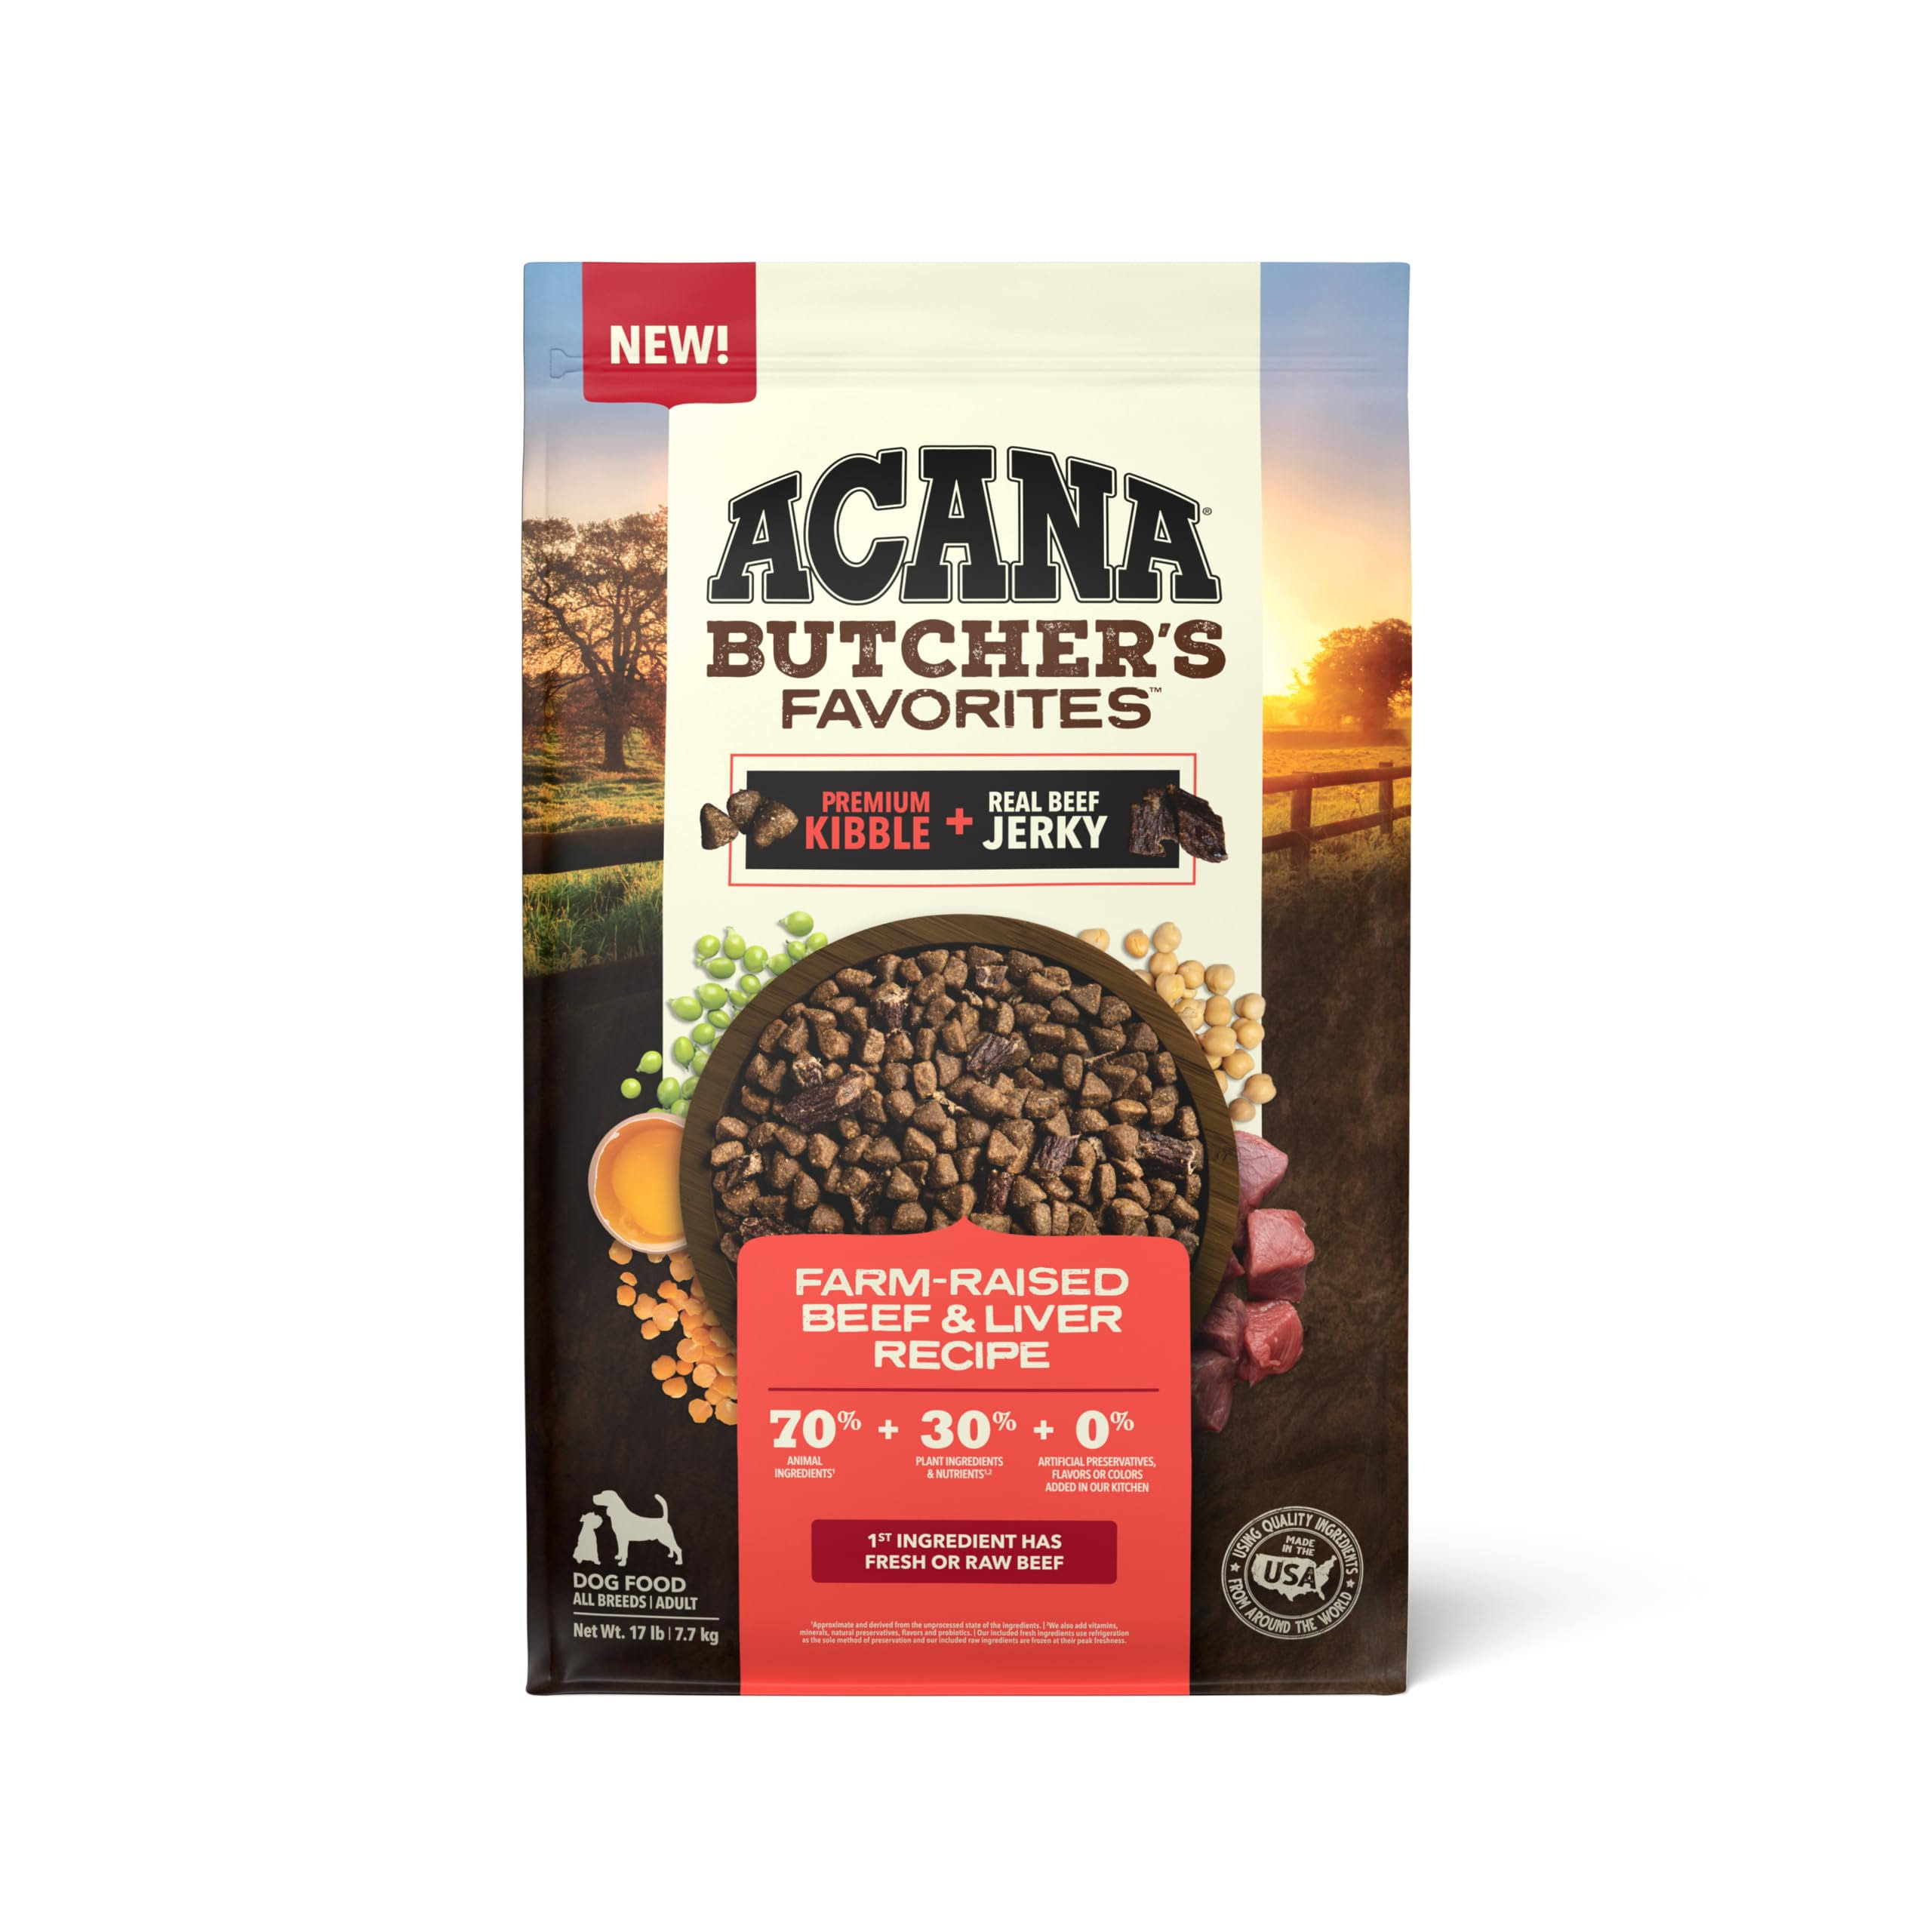 Acana Butcher's Favorites Dry Dog Food, Farm-Raised Beef & Liver Recipe - 17 lb